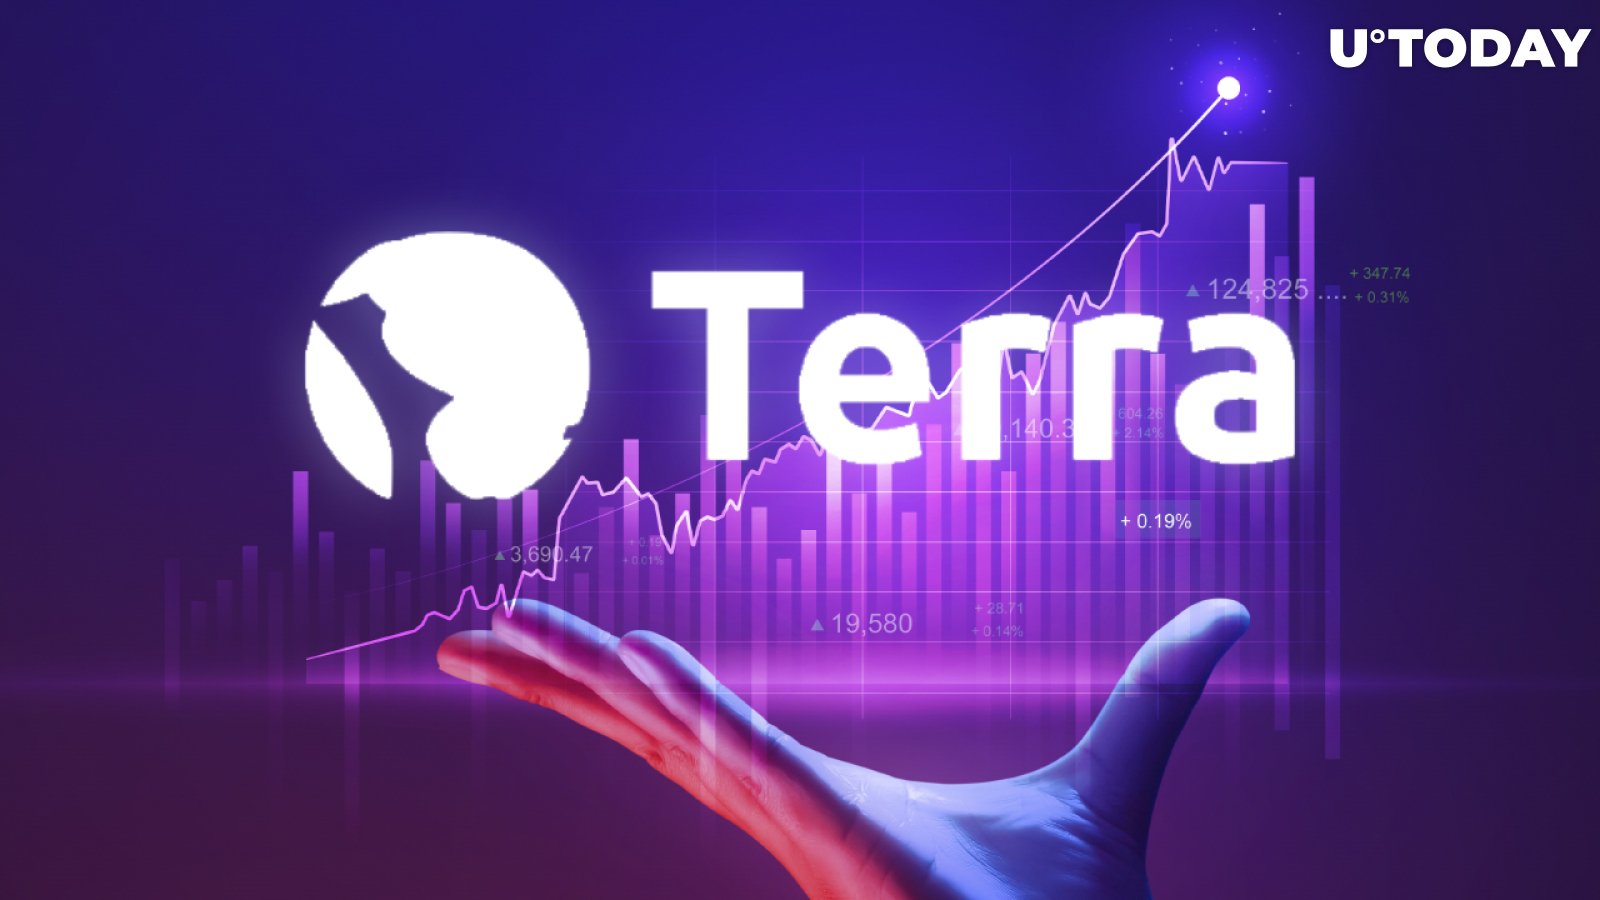 Terra (LUNA) Price Reaches New Record High Despite Brutal Market Correction